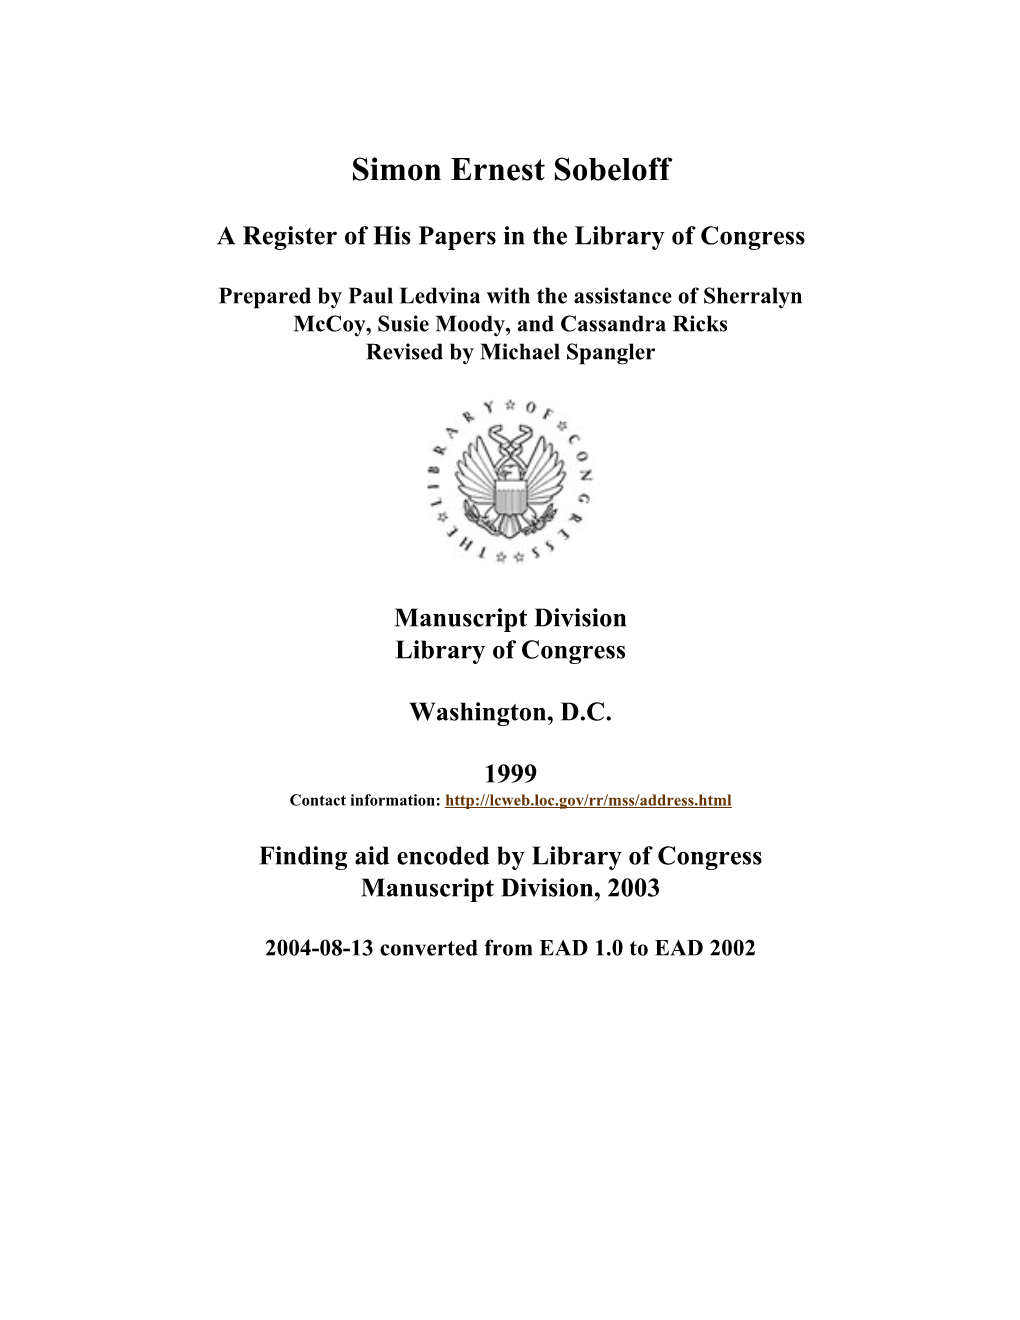 Papers of Simon Ernest Sobeloff